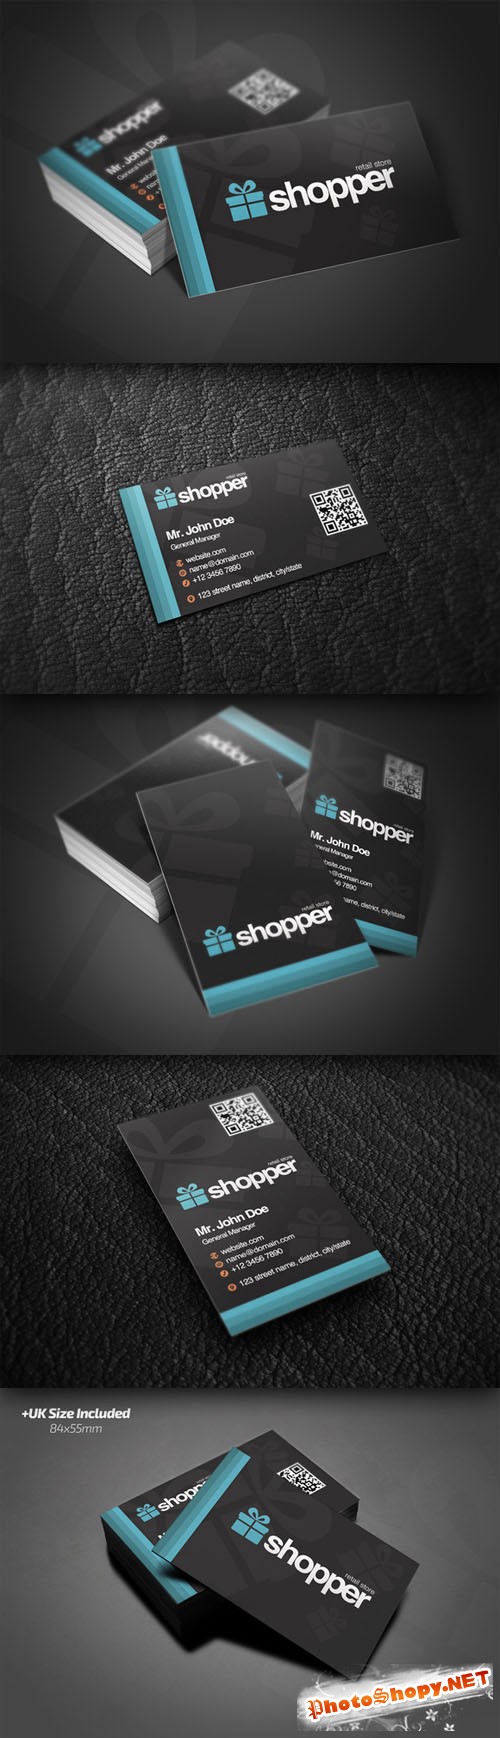 CreativeMarket - Shopper Business Card